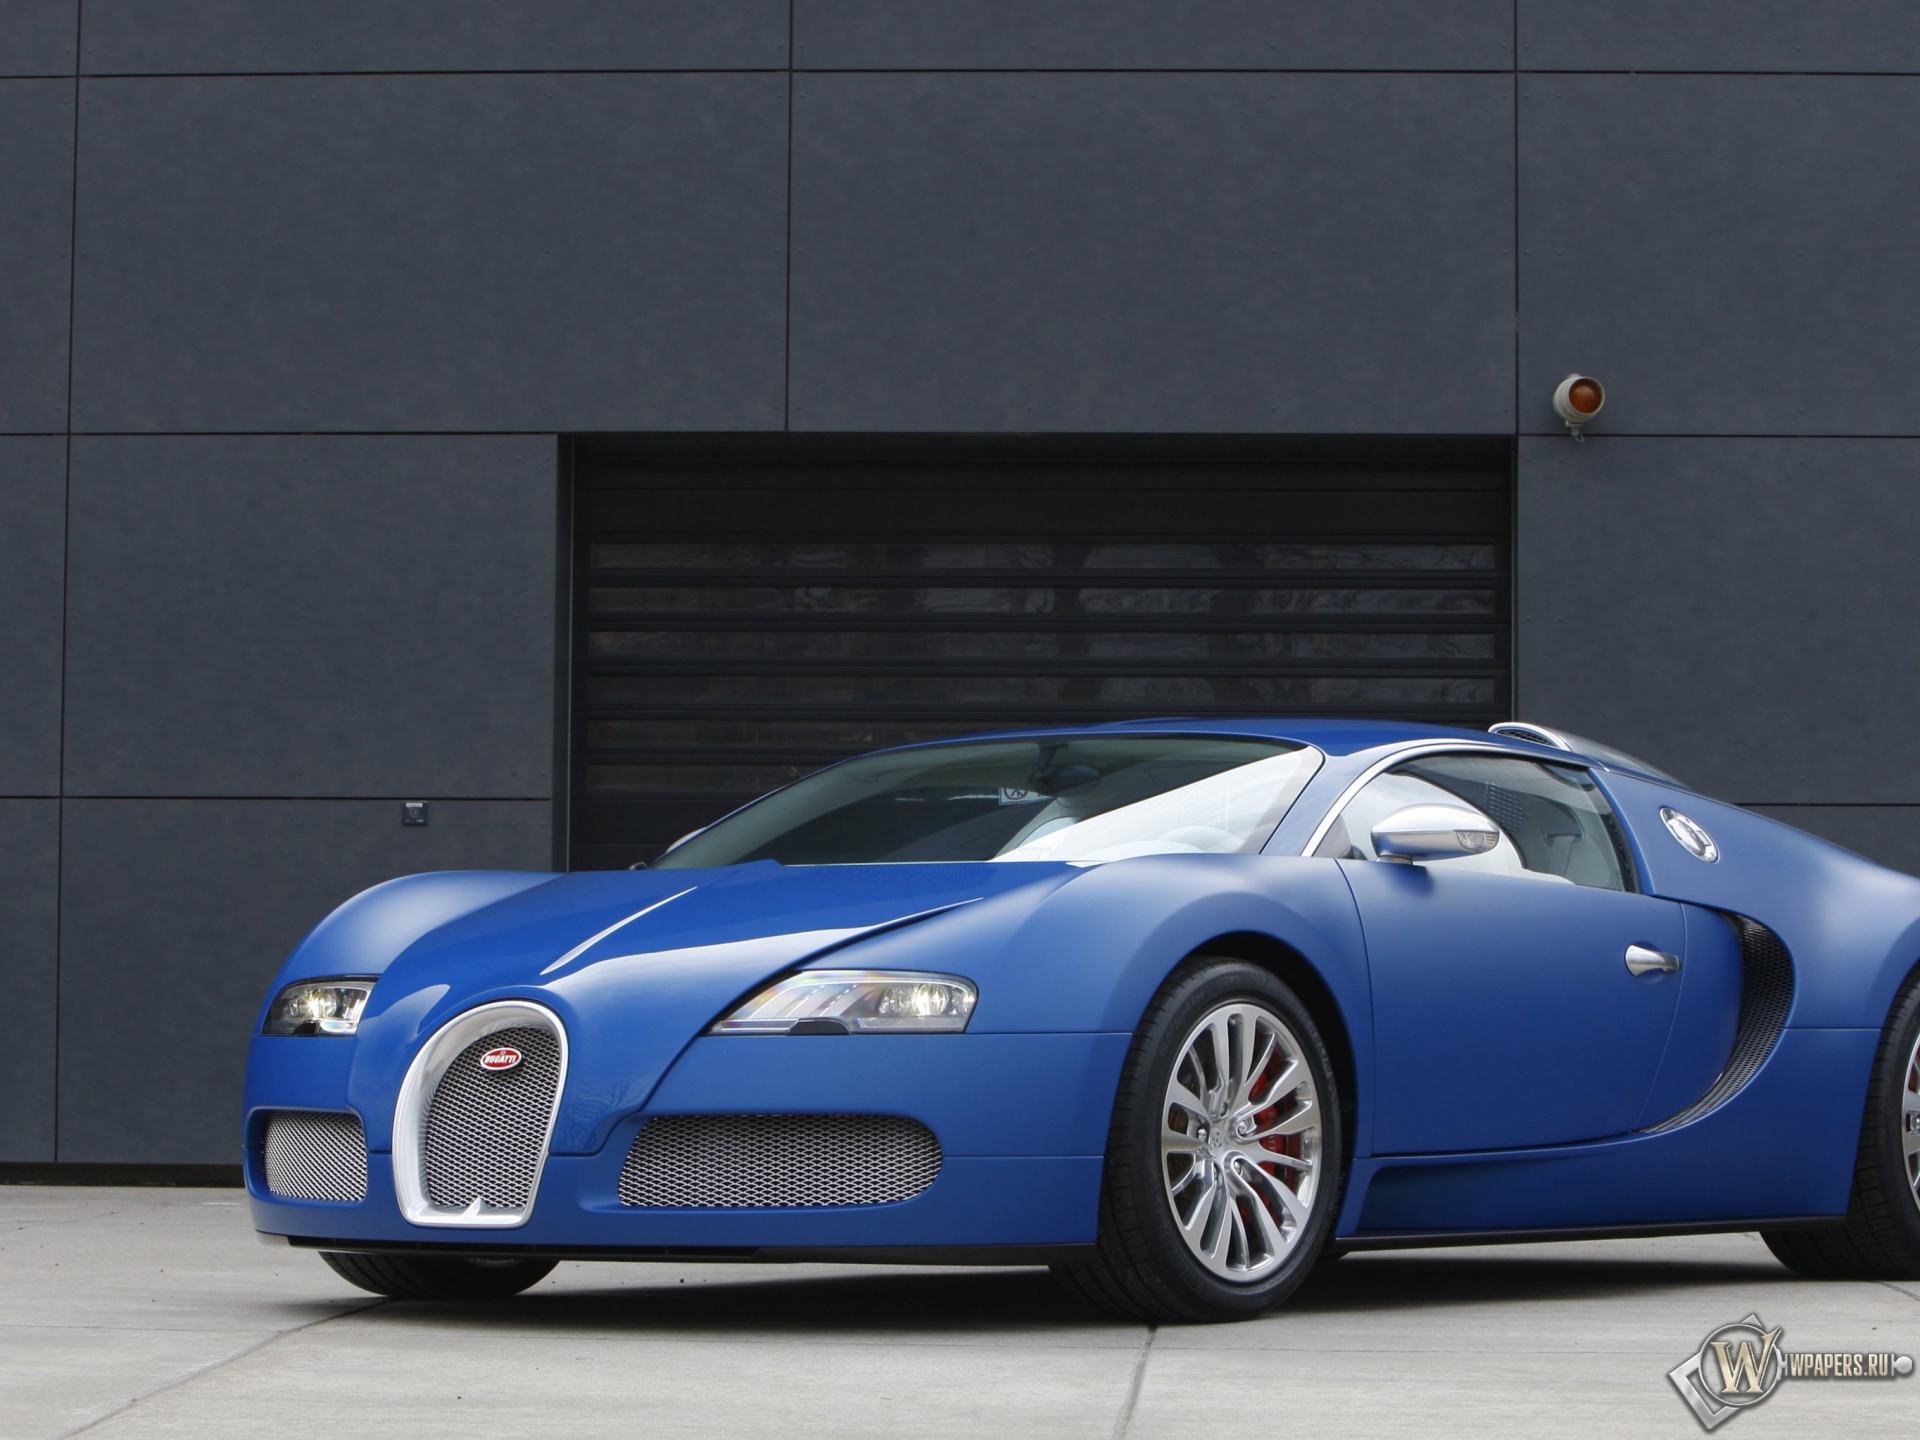 Bugatti Veyron Bleu Centenaire (2009) 1920x1440